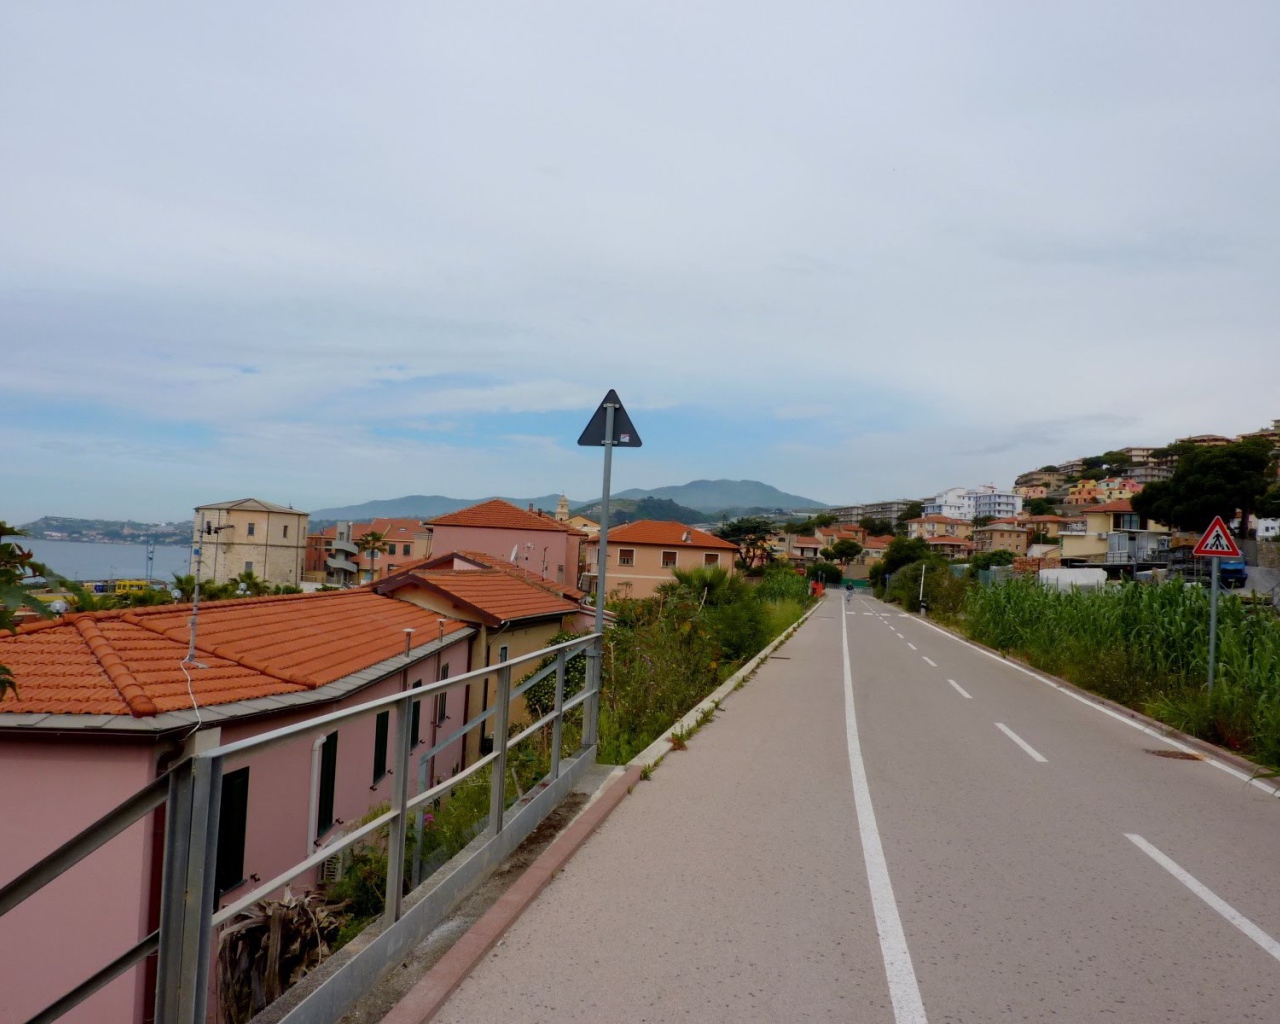 The road along the coast in Santo Stefano al Mare, Italy